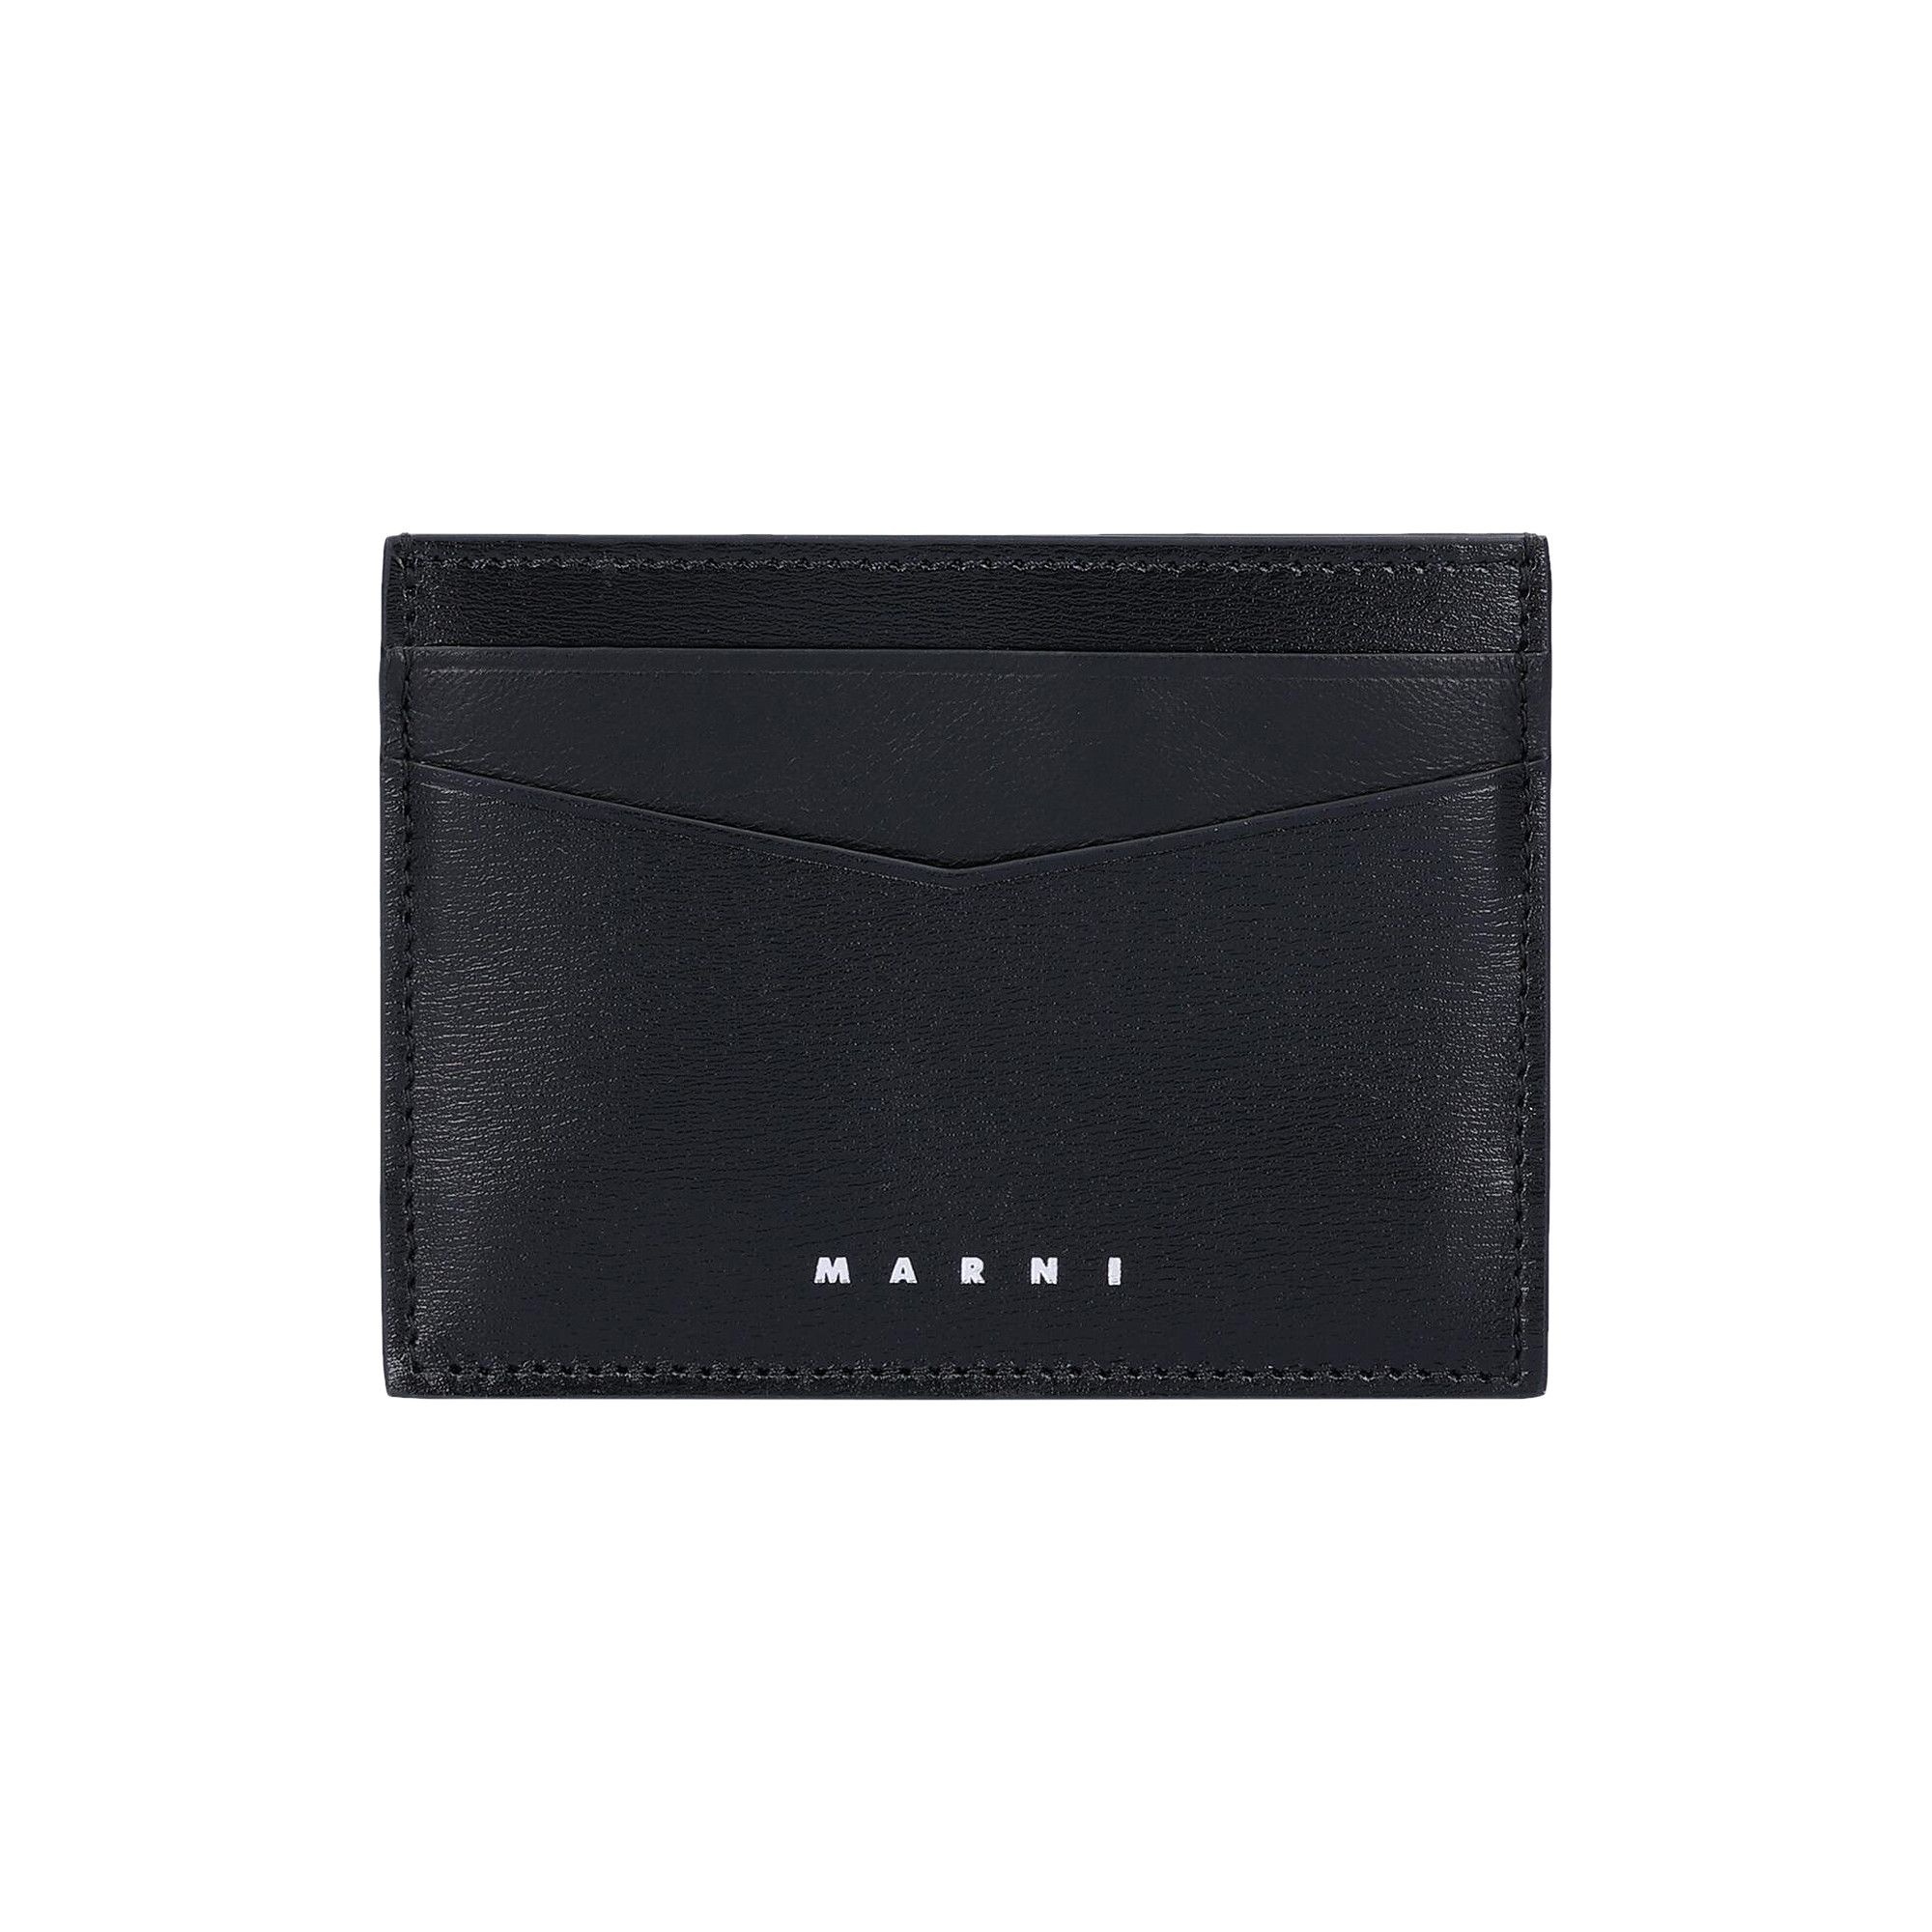 Marni Wallet 'Black' - 1